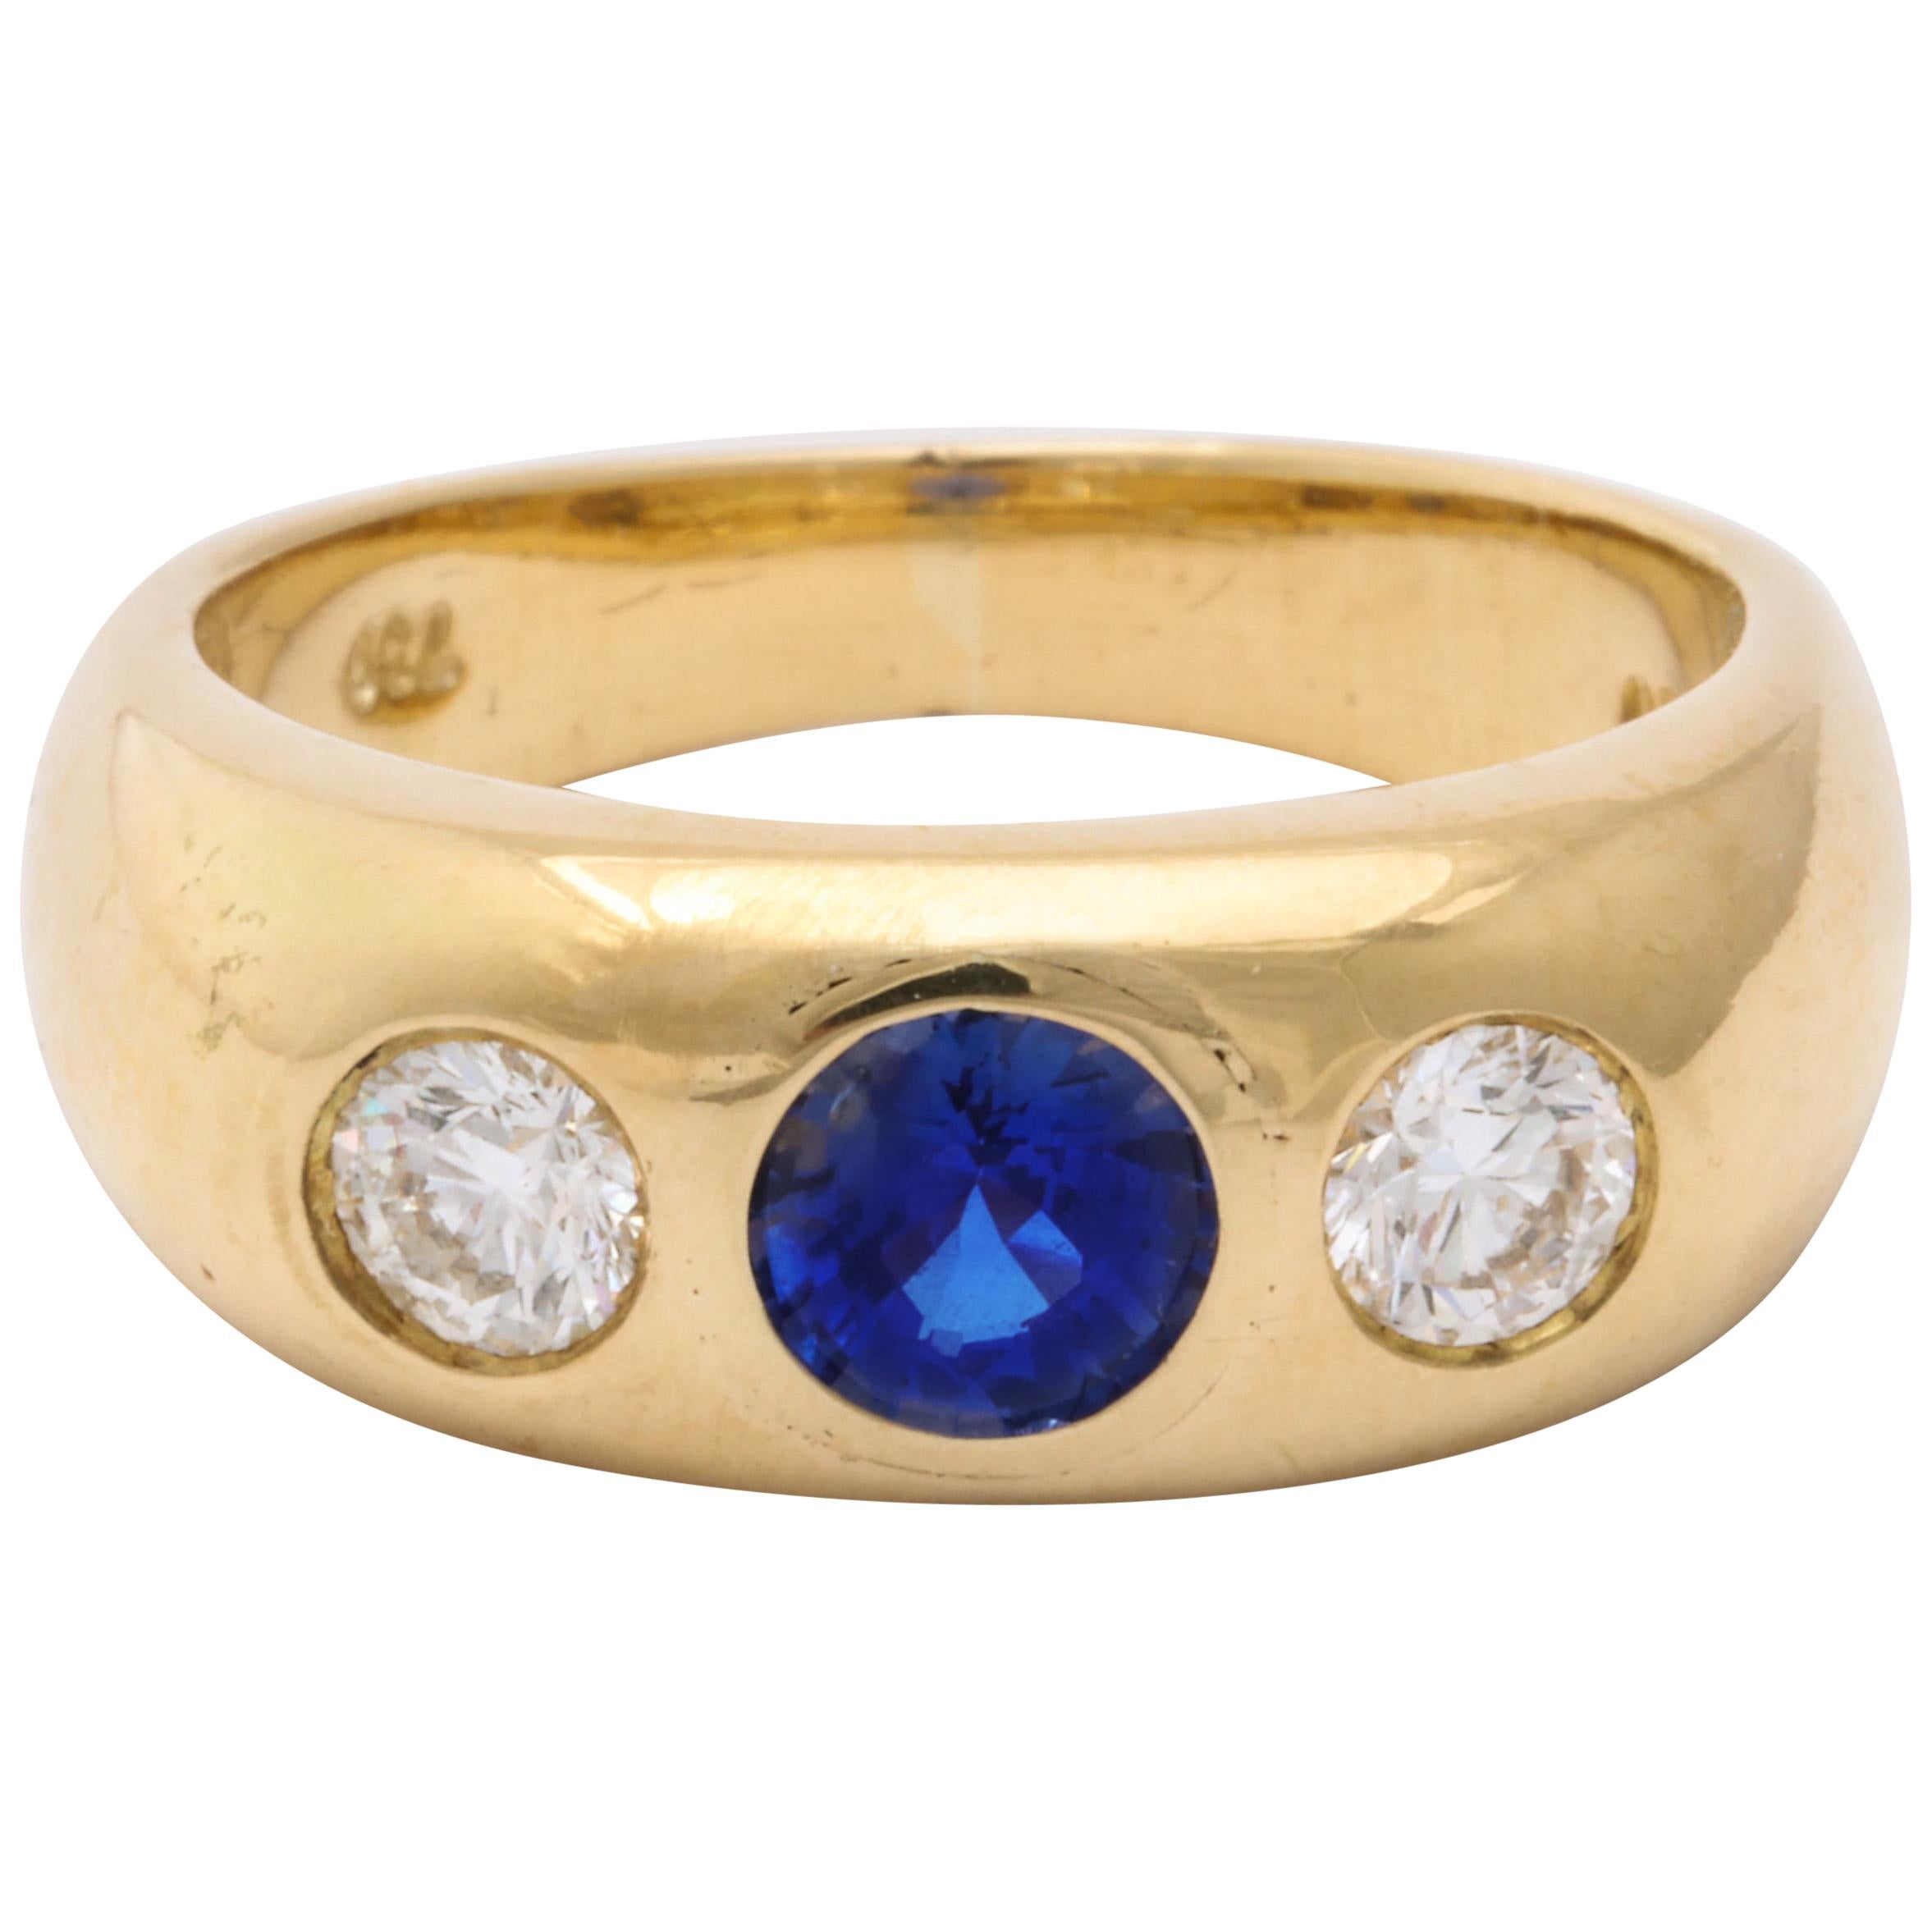 Vintage Art Deco Sapphire and Diamond Gypsy Set Ring